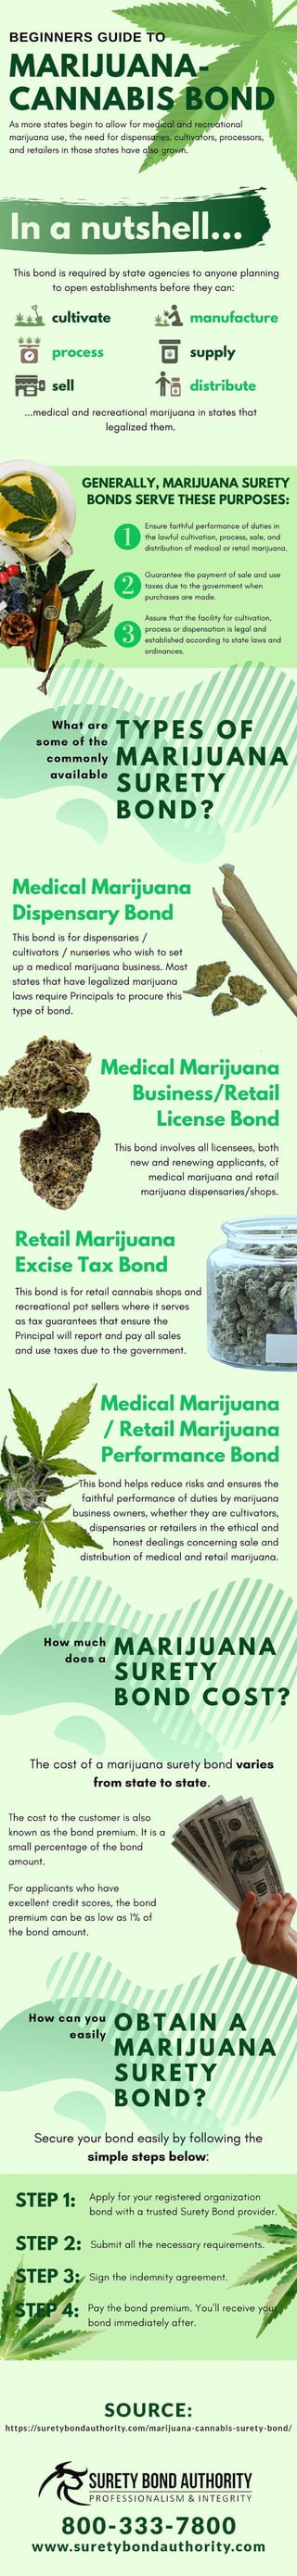 A Beginners Guide to Marijuana-Cannabis Surety Bonds